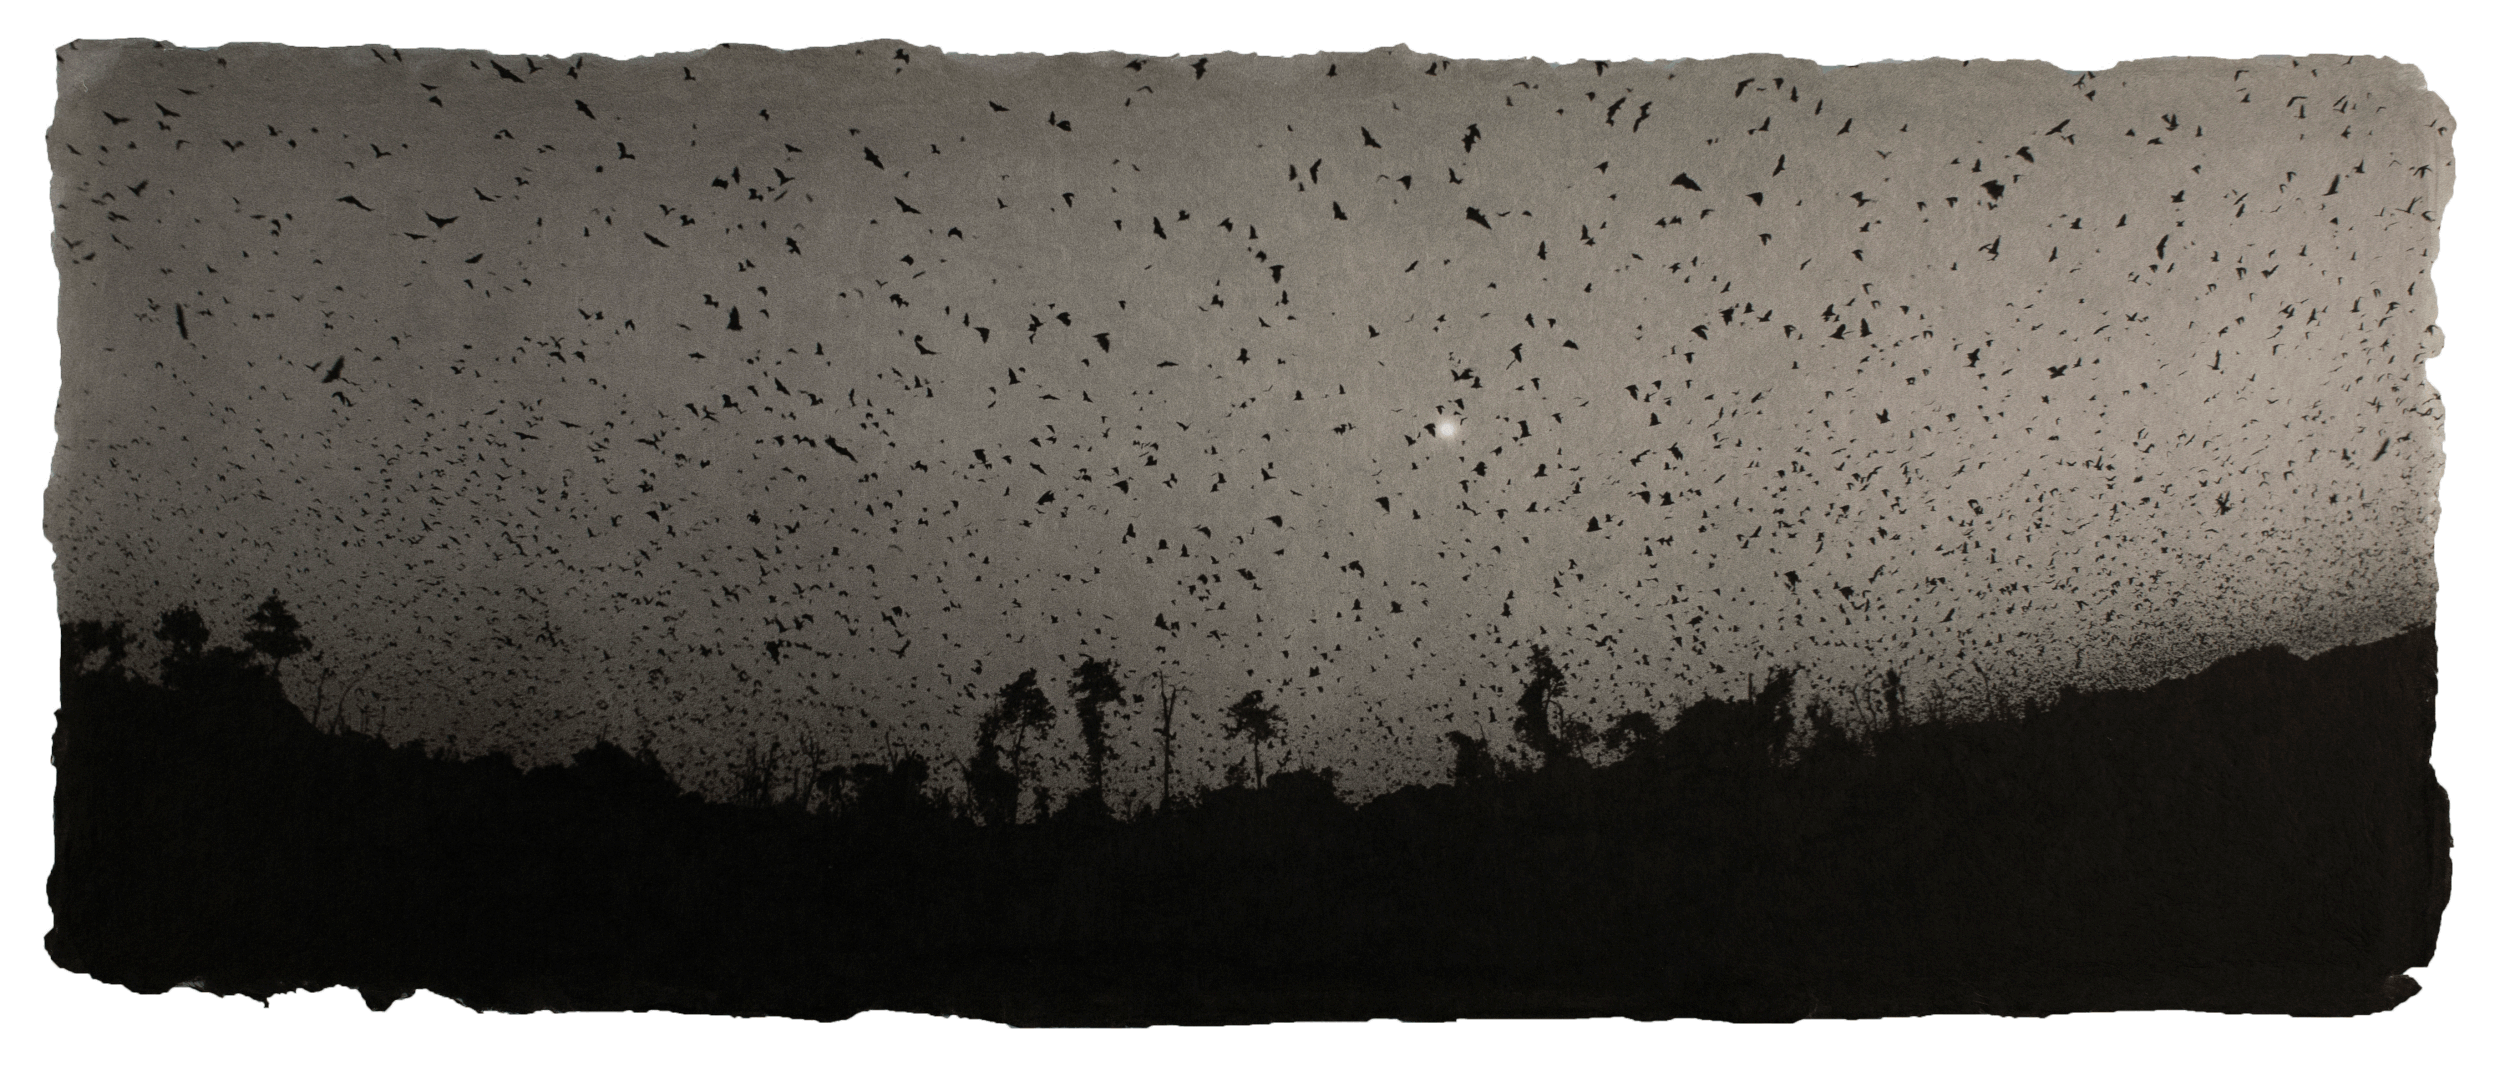  Straw-colored fruit bat migration, Zambia 